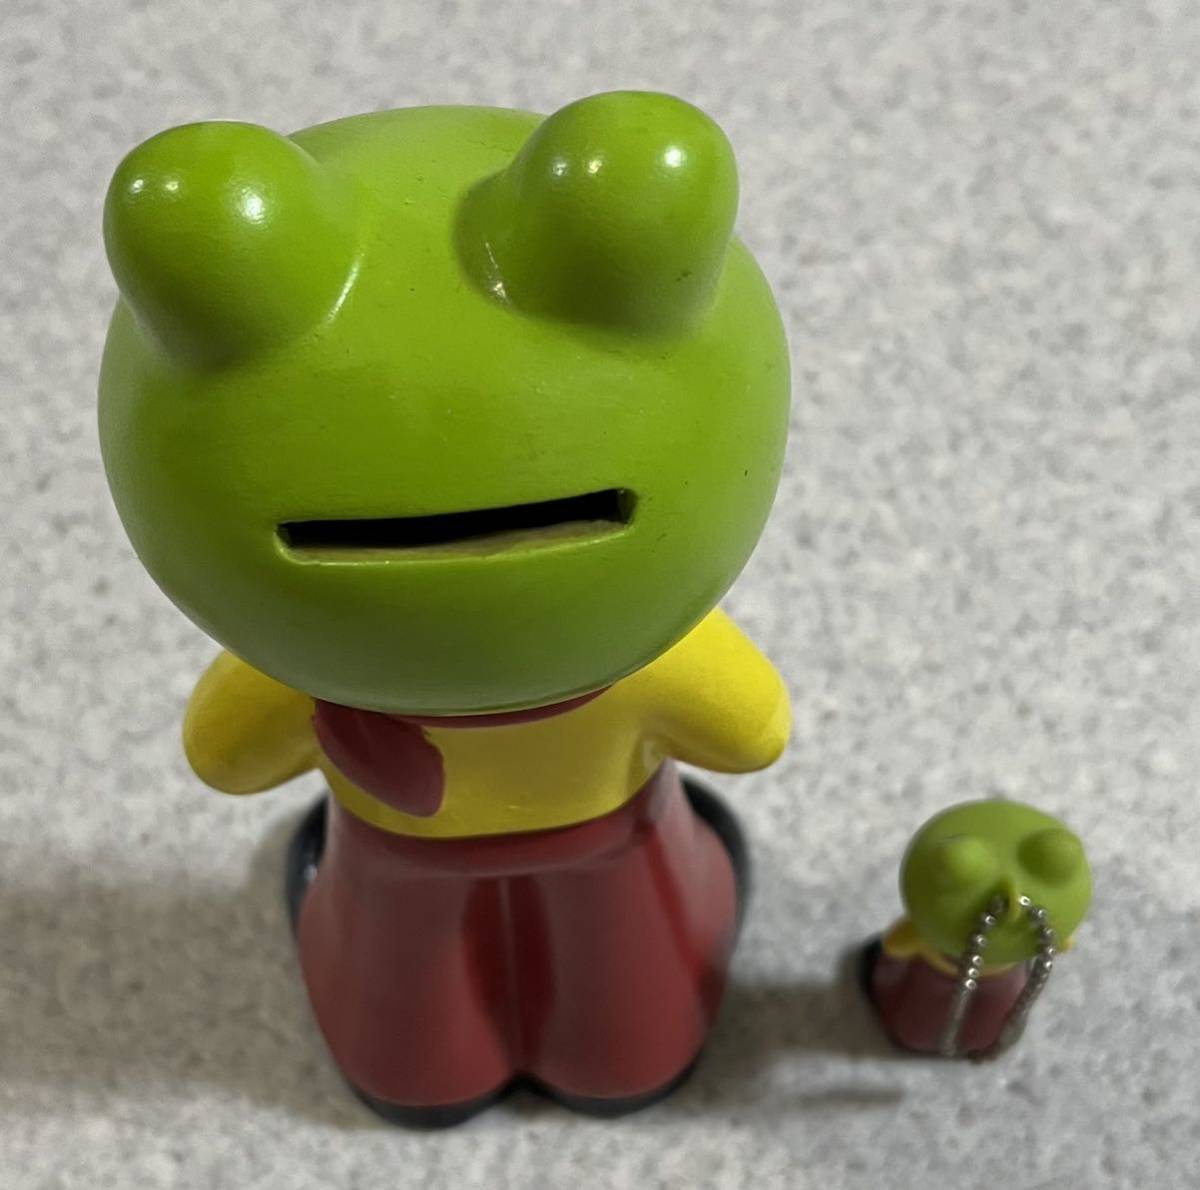  Kermit kero язык kero Chan koro Chan .... лягушка герой товары фигурка копилка брелок для ключа petsu